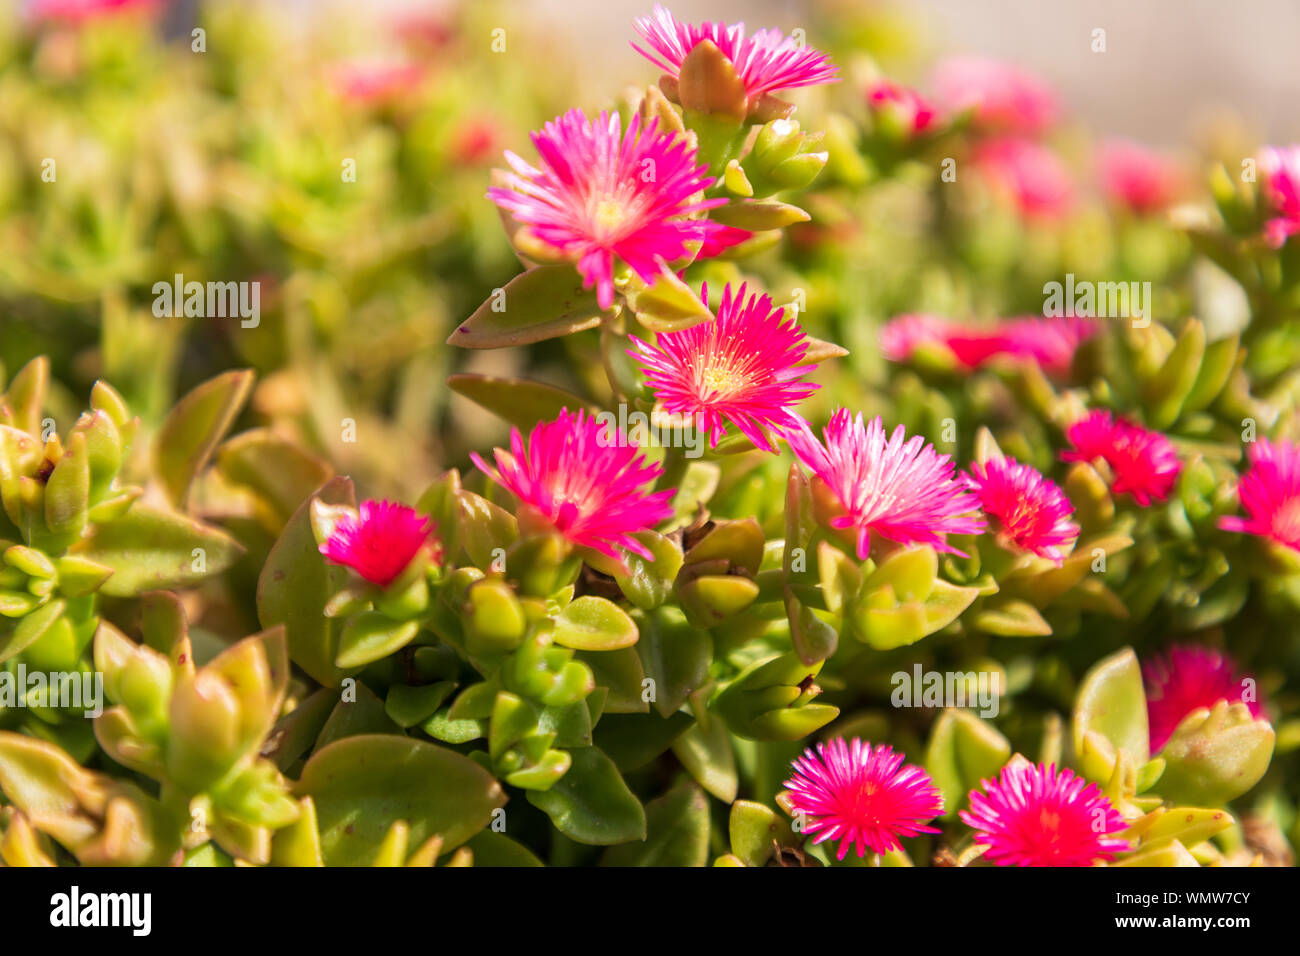 Italy, Apulia, Metropolitan City of Bari, Monopoli. Ice plant (Carpobrotus edulis) with magenta flowers. Stock Photo